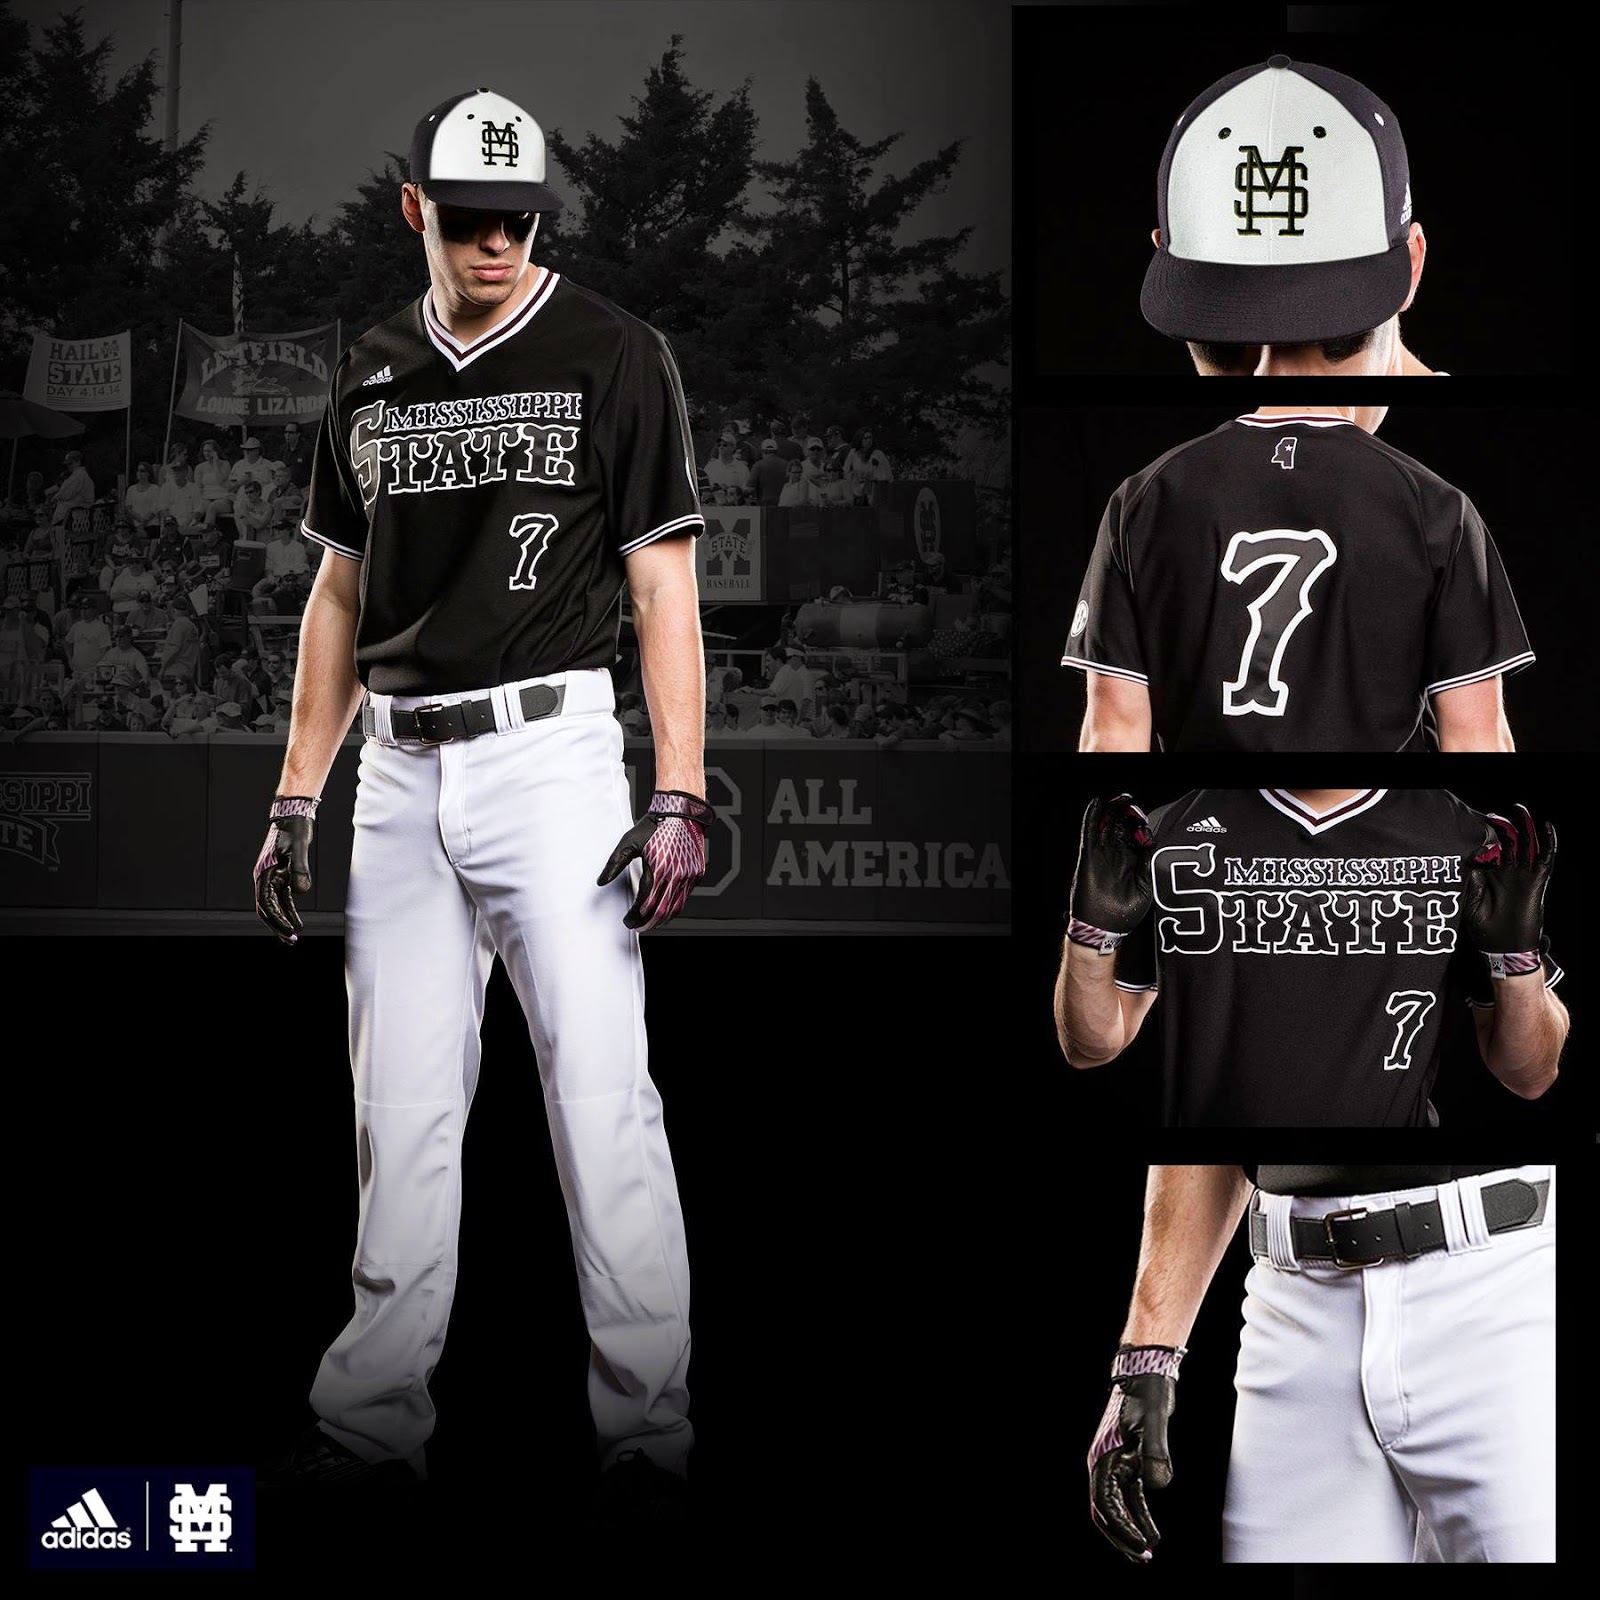 Hail State Baseball Uniform Tracker: The 17 Combinations